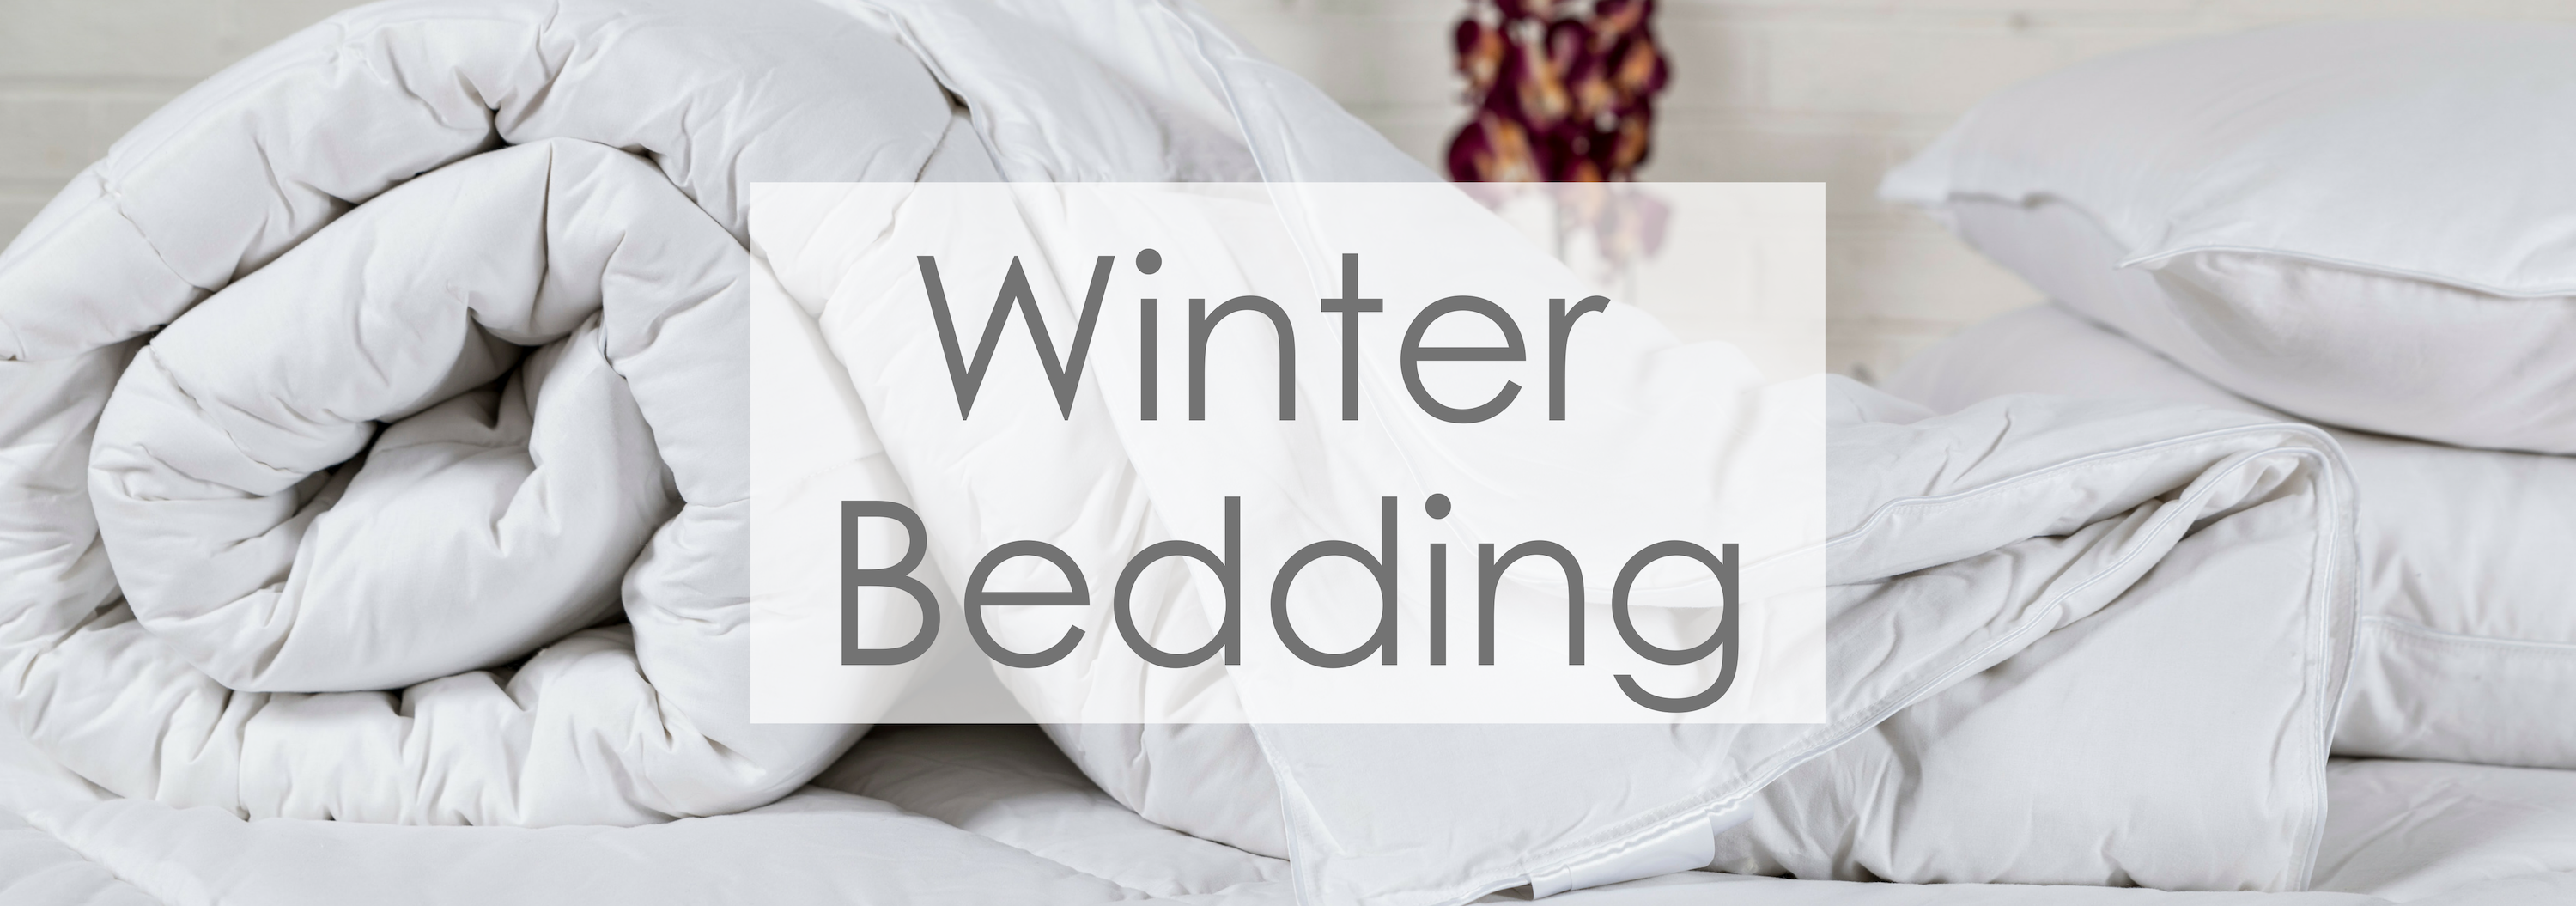 Winter bedding banner